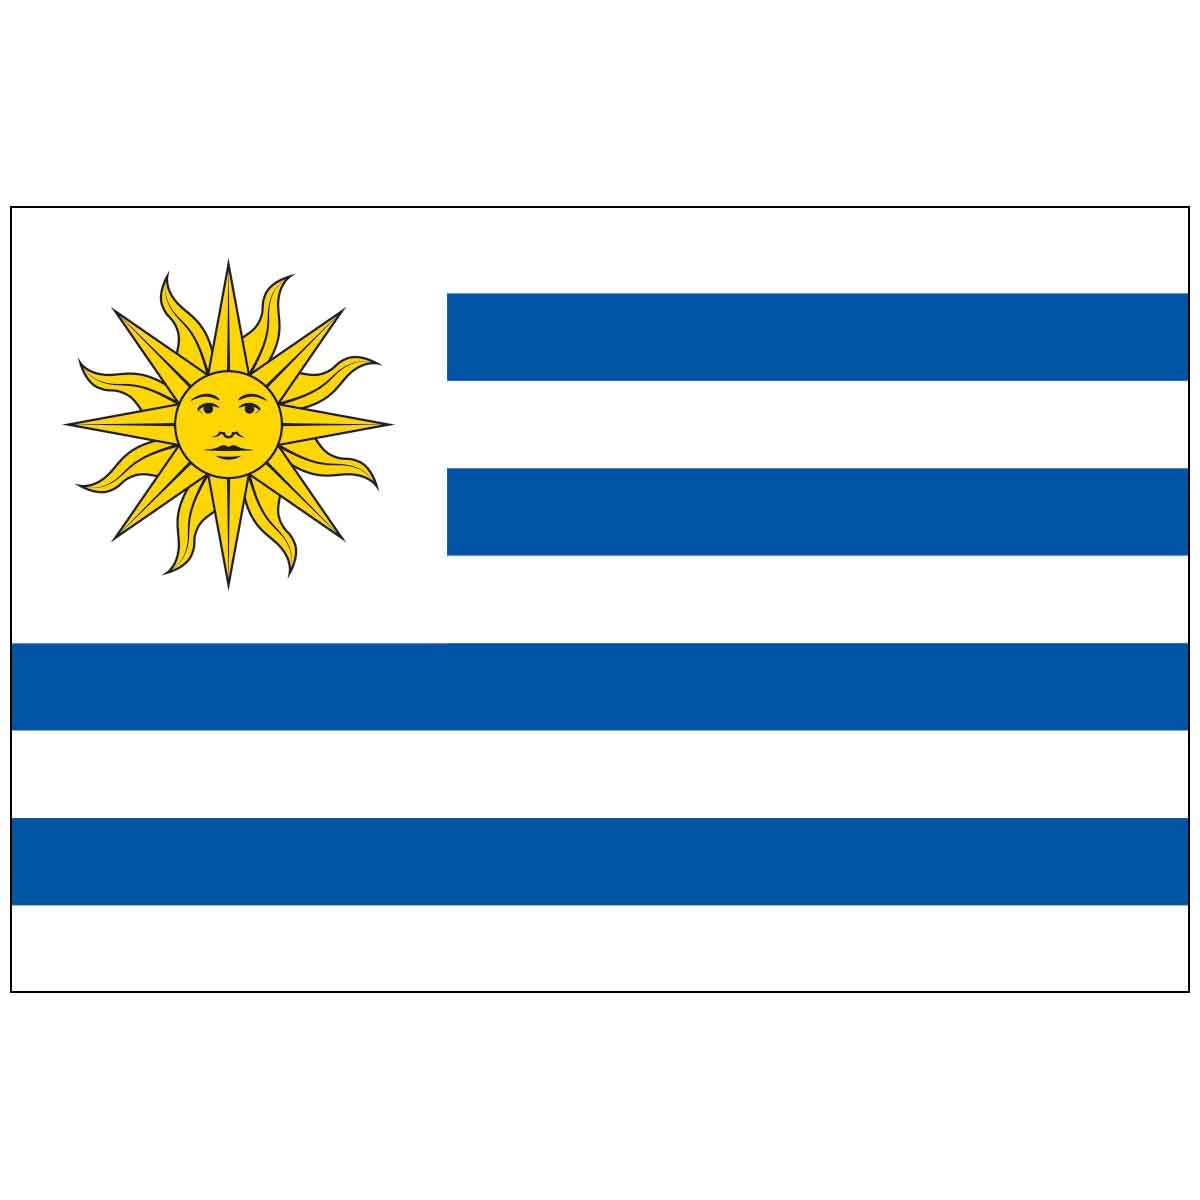 Uruguay (UN/OAS) World Flag